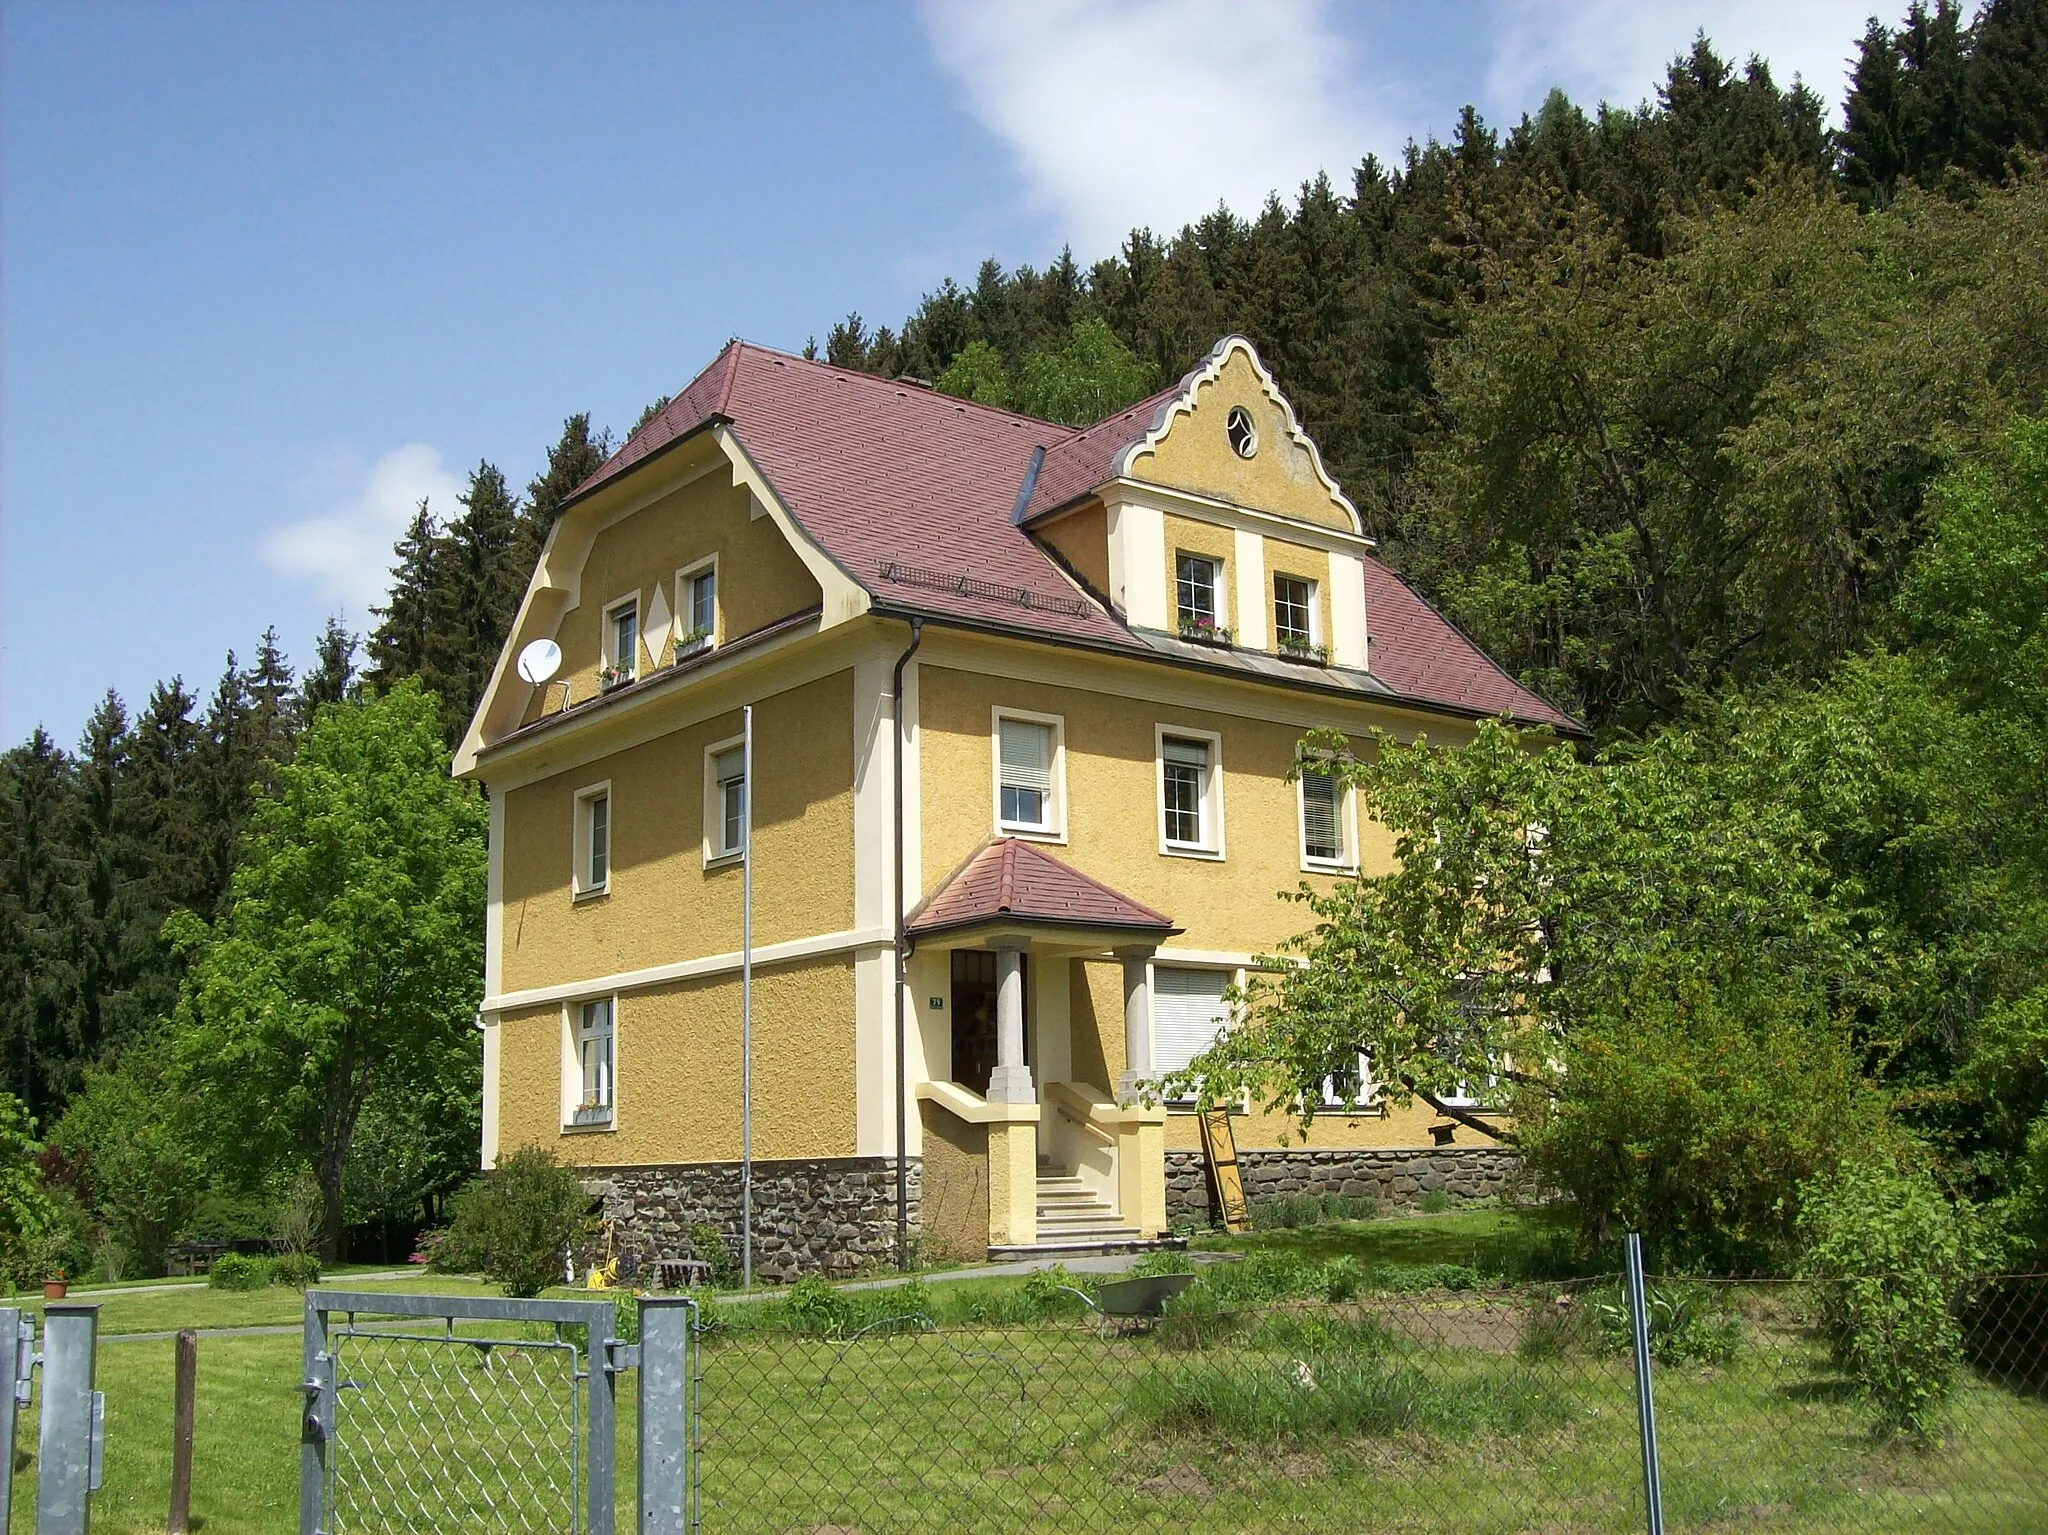 Photo showing: Volksschule